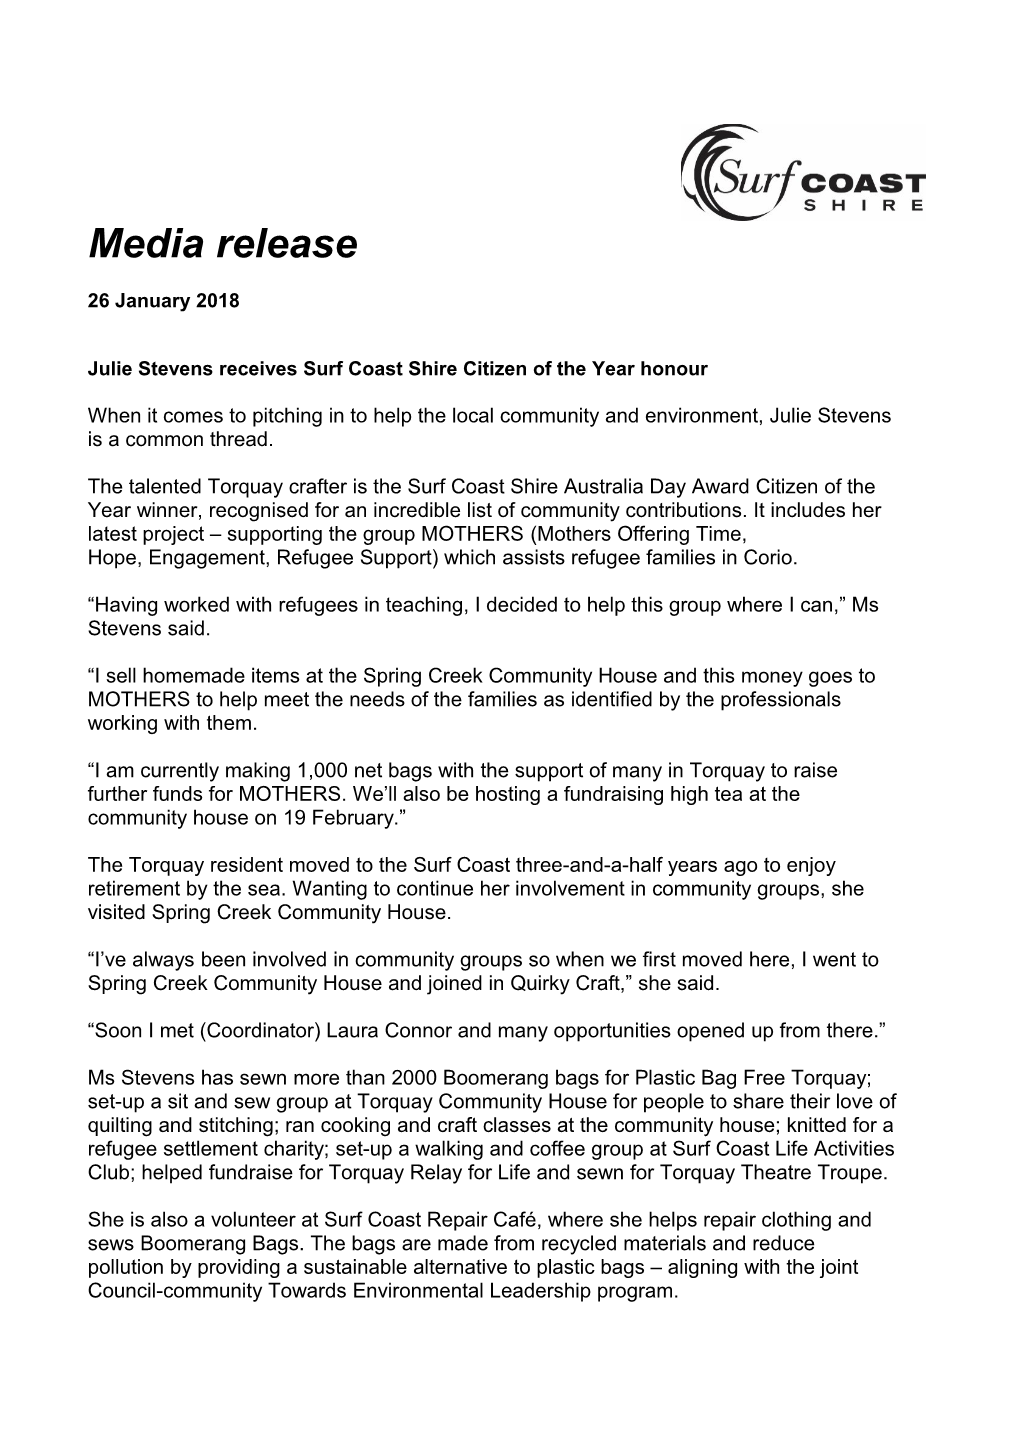 Julie Stevens Receives Surf Coast Shire Citizen of the Year Honour